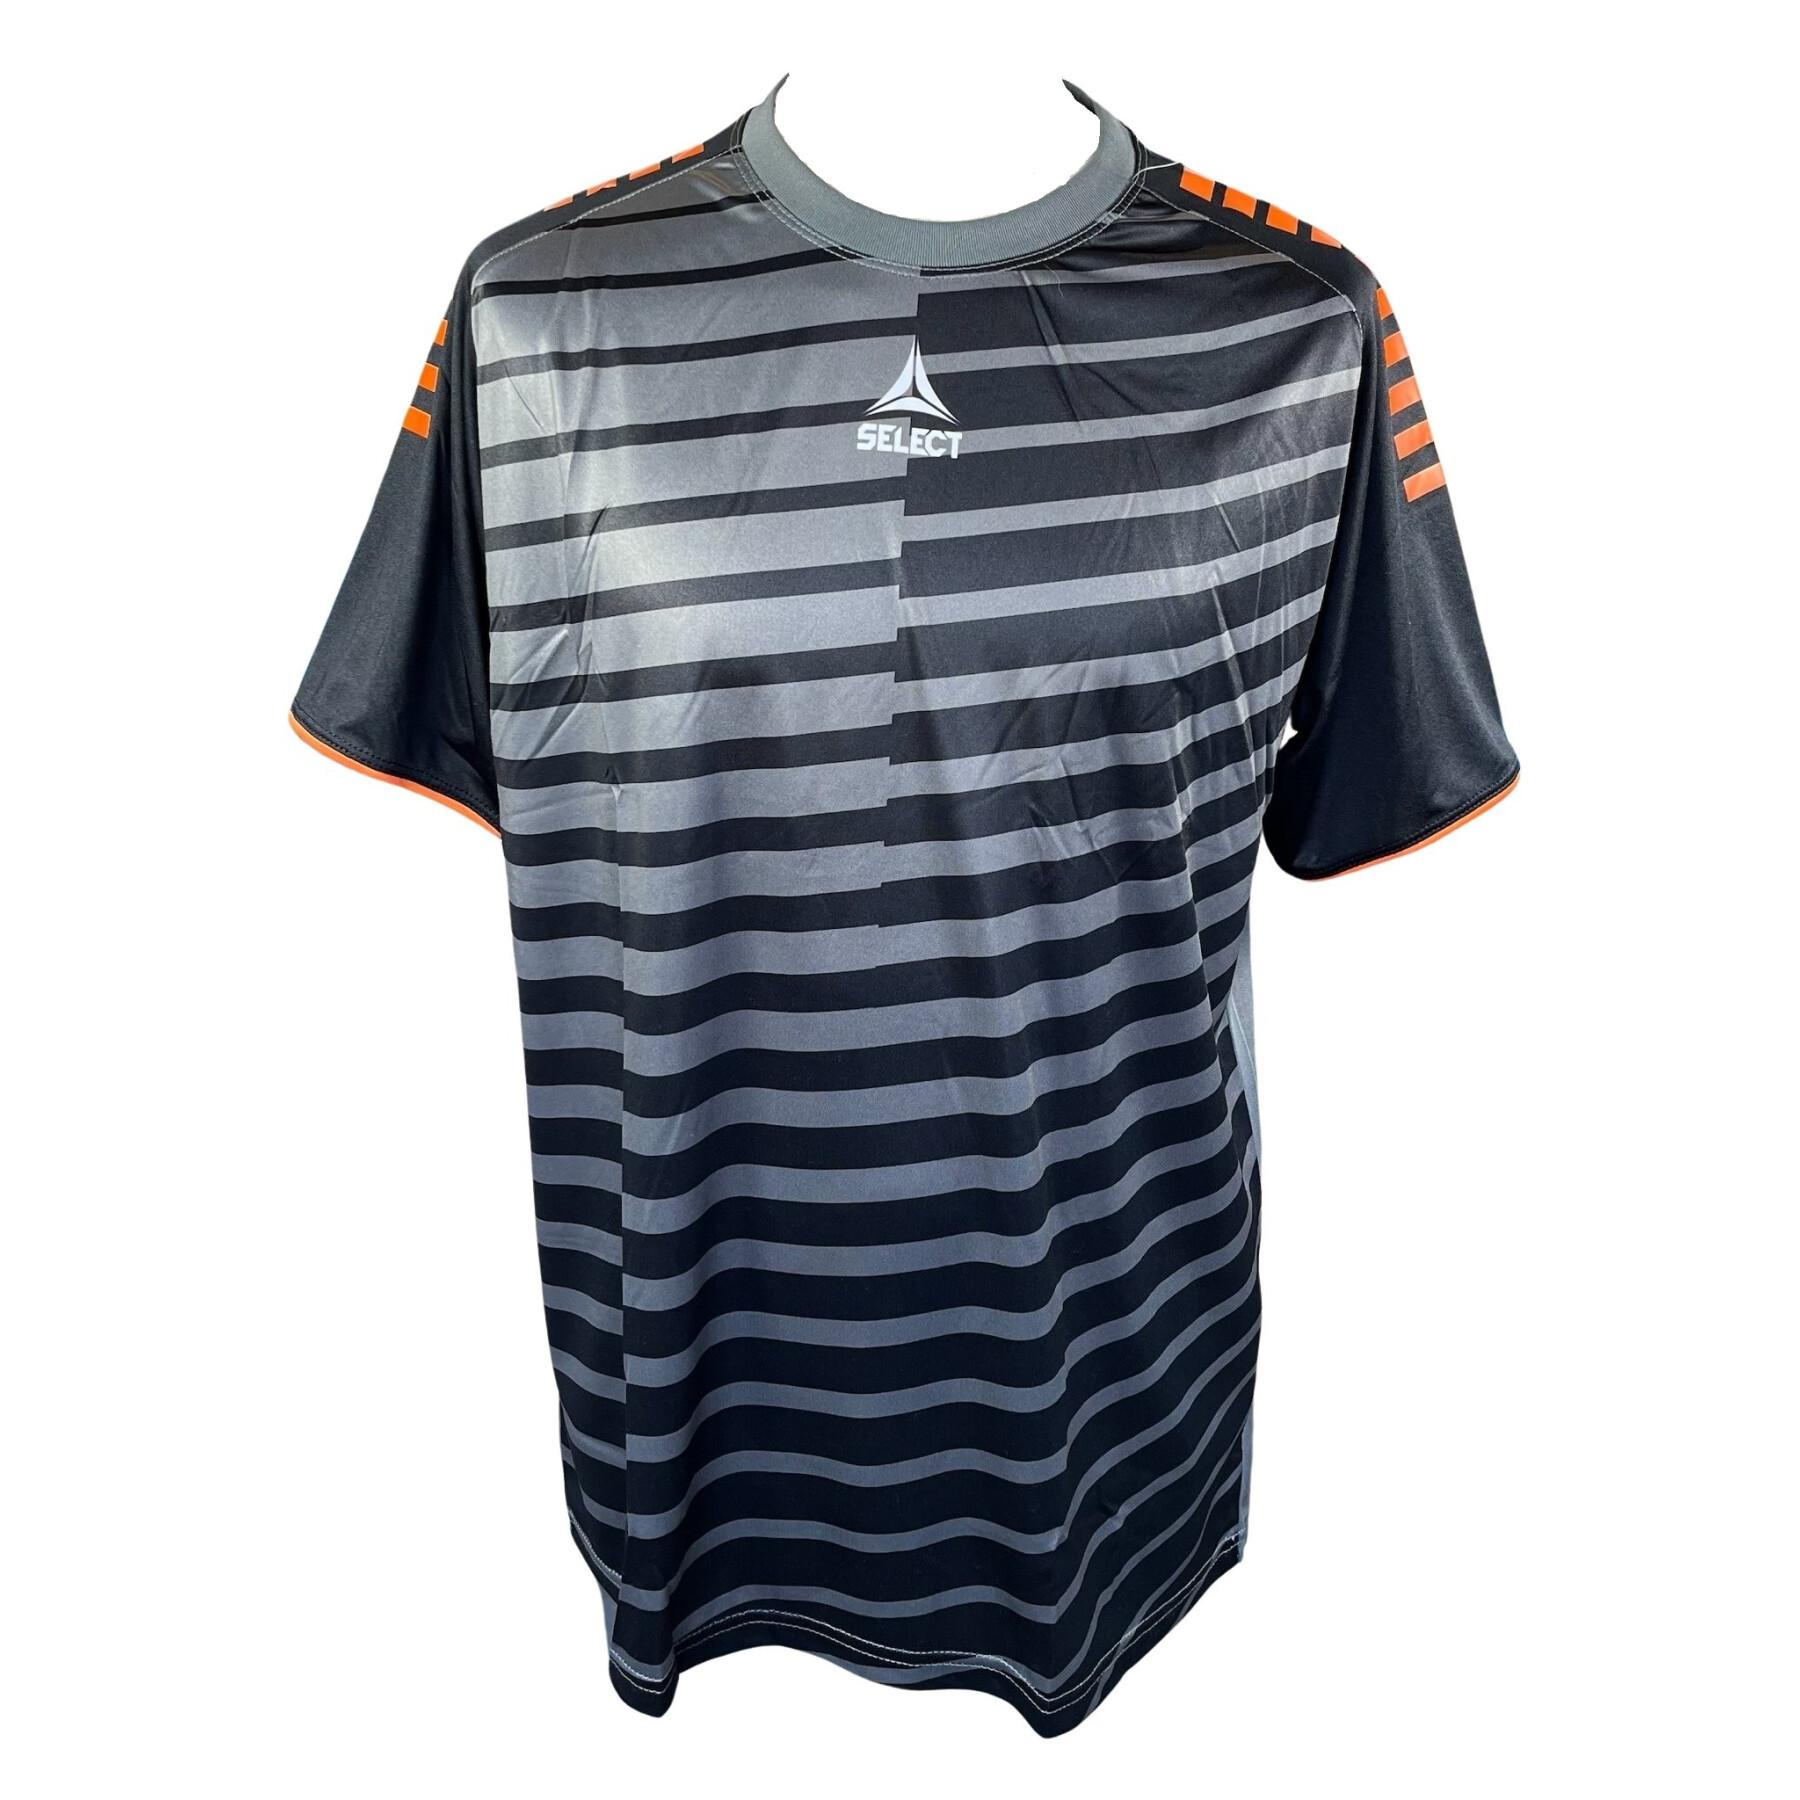 Camiseta Select Zebra